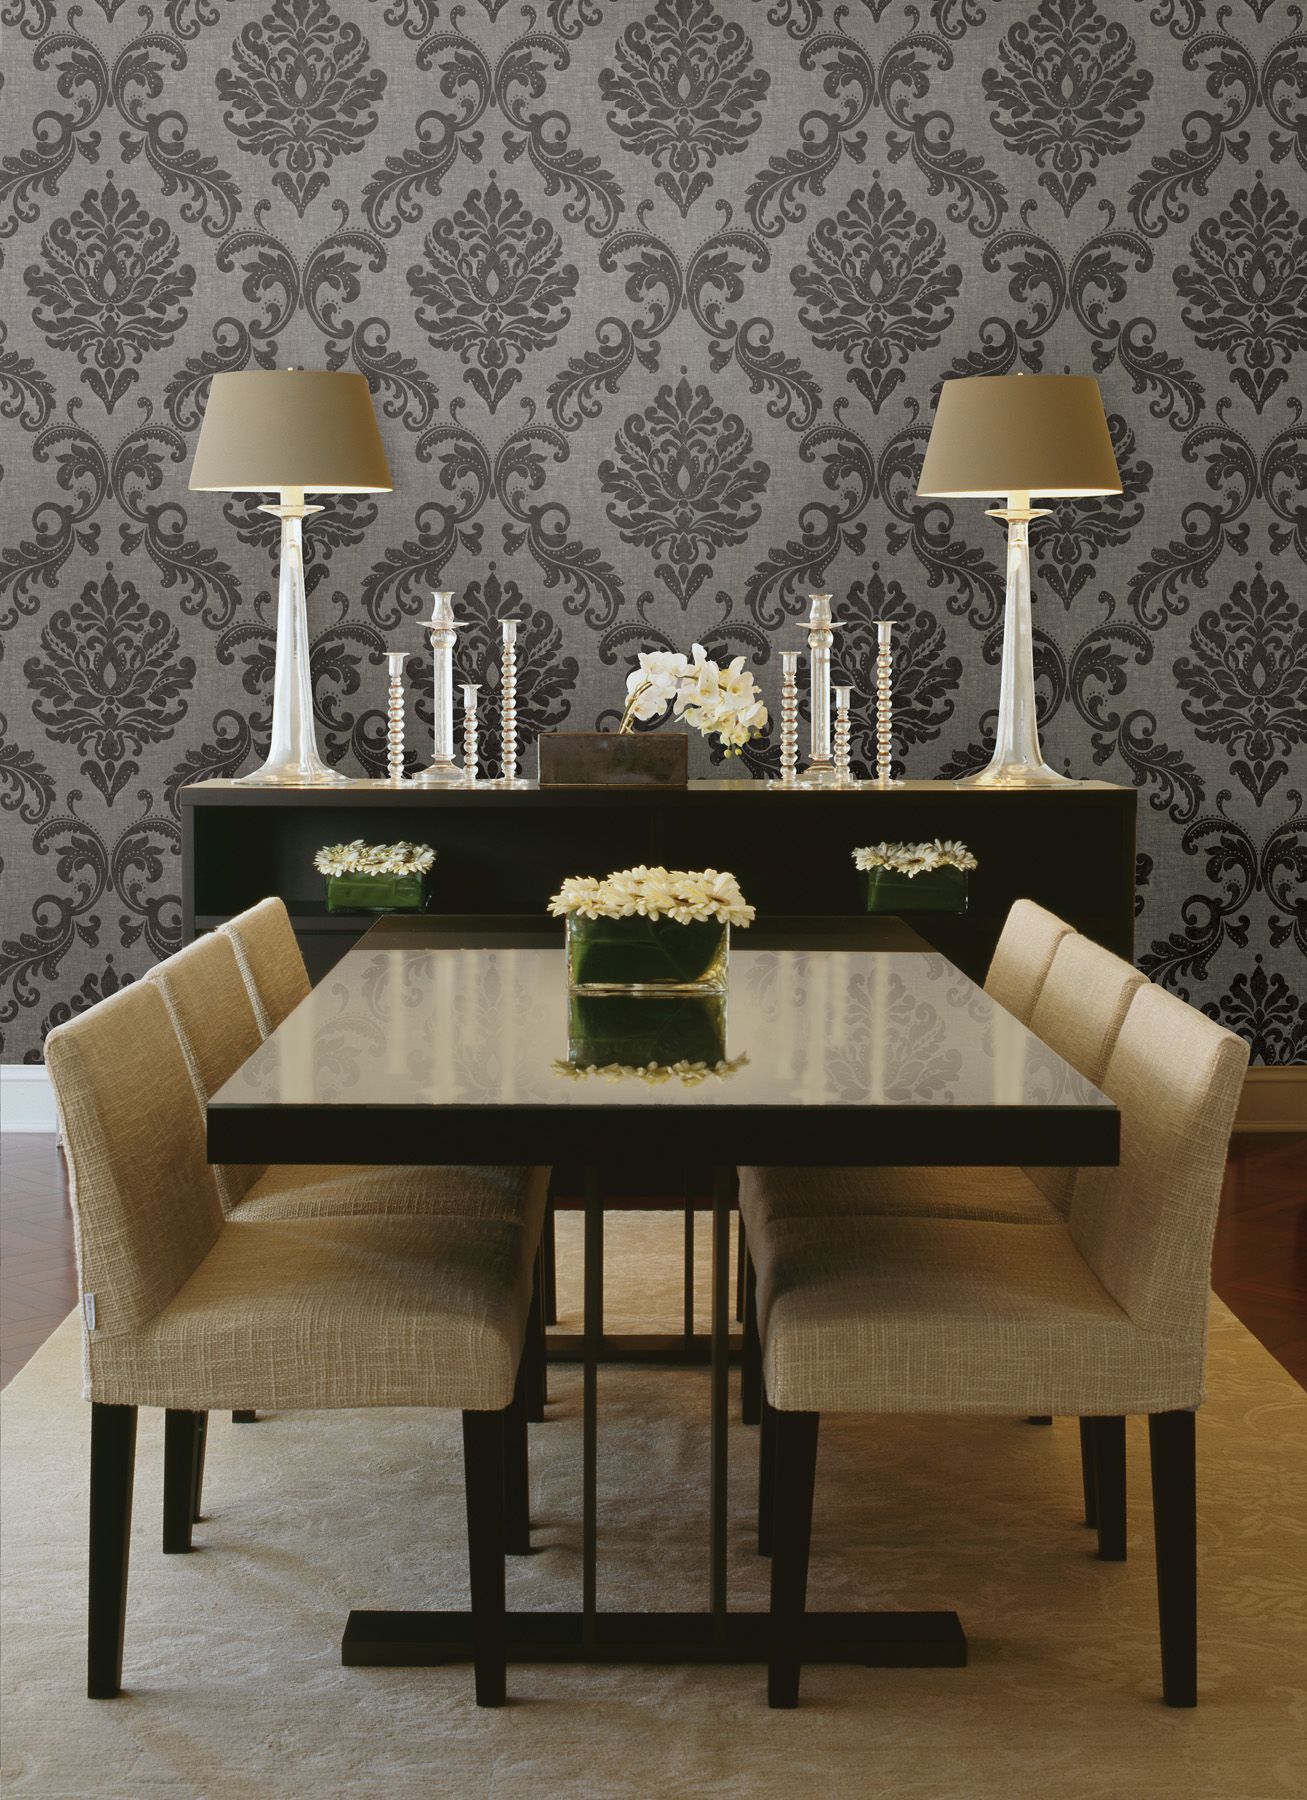 wallpaper designs for dining room,furniture,table,room,interior design,wallpaper